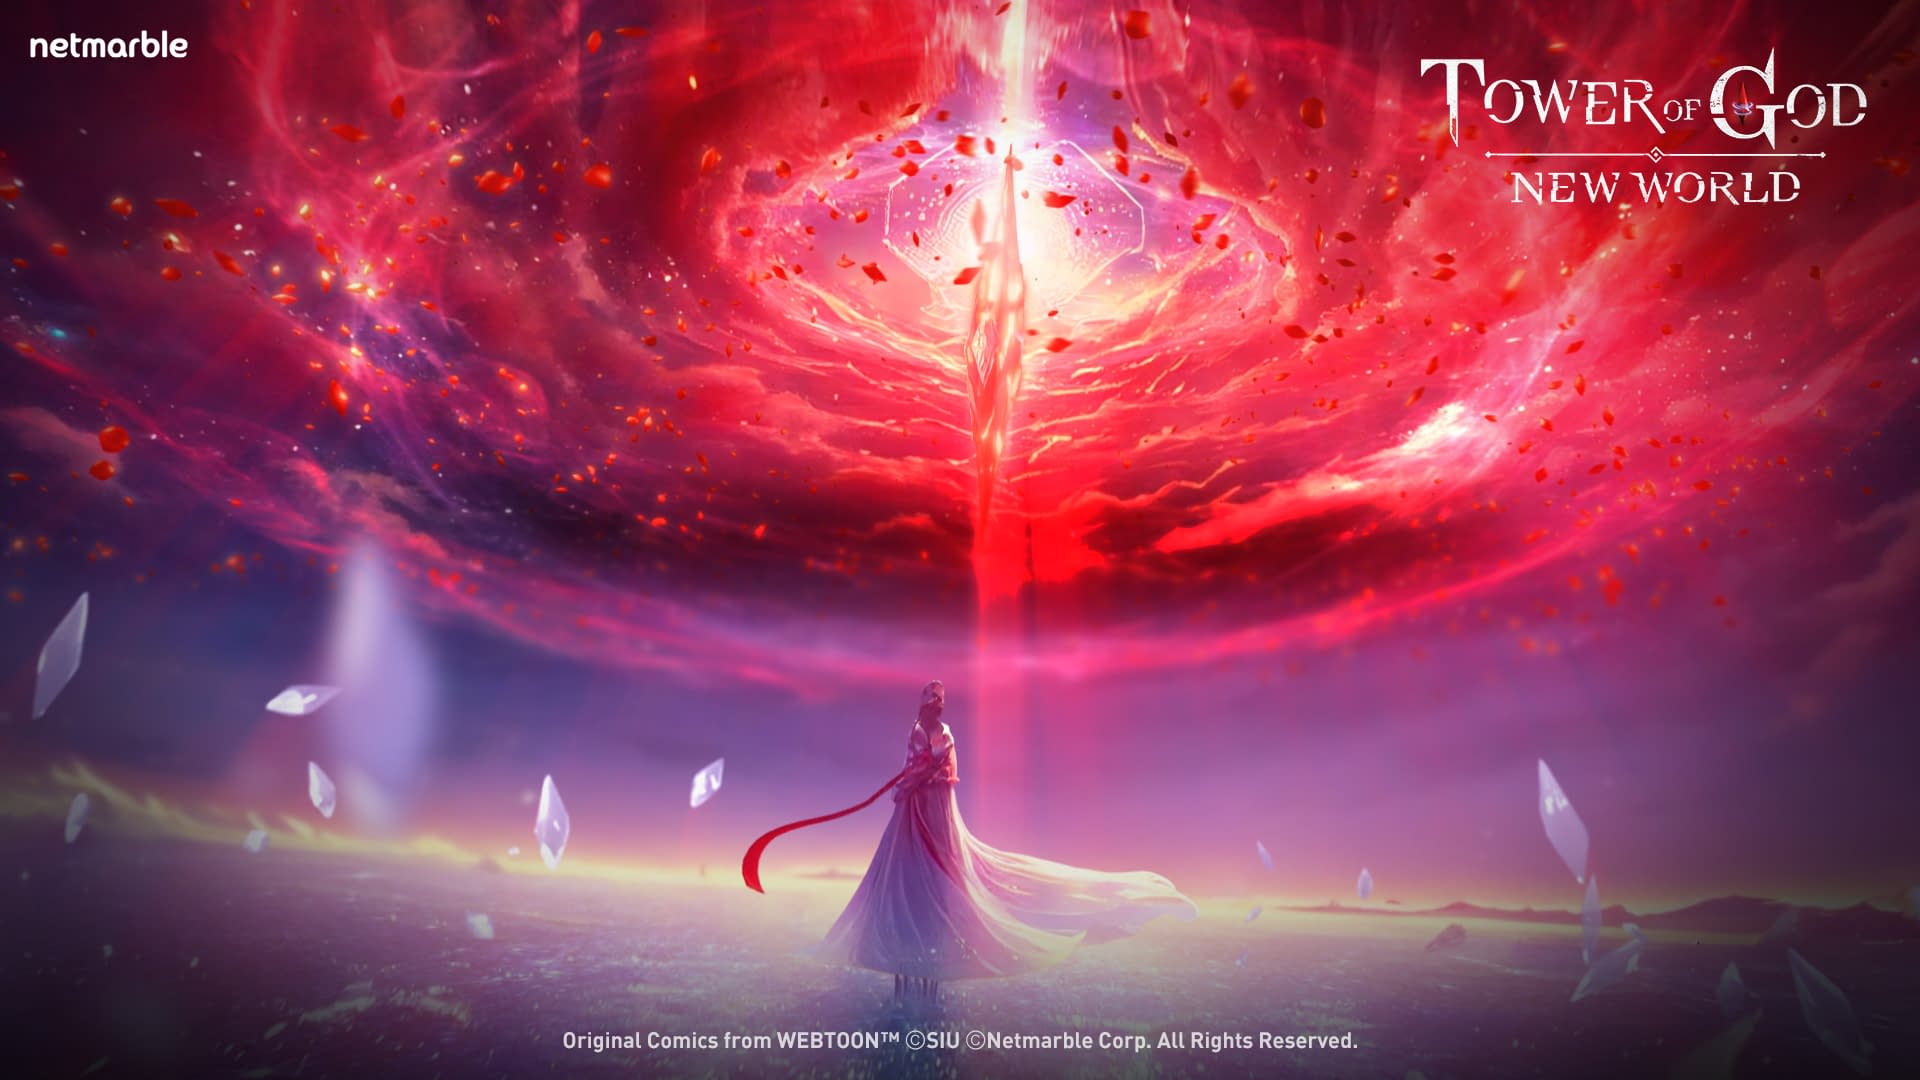 Tower of God Releases Season 2 Trailer